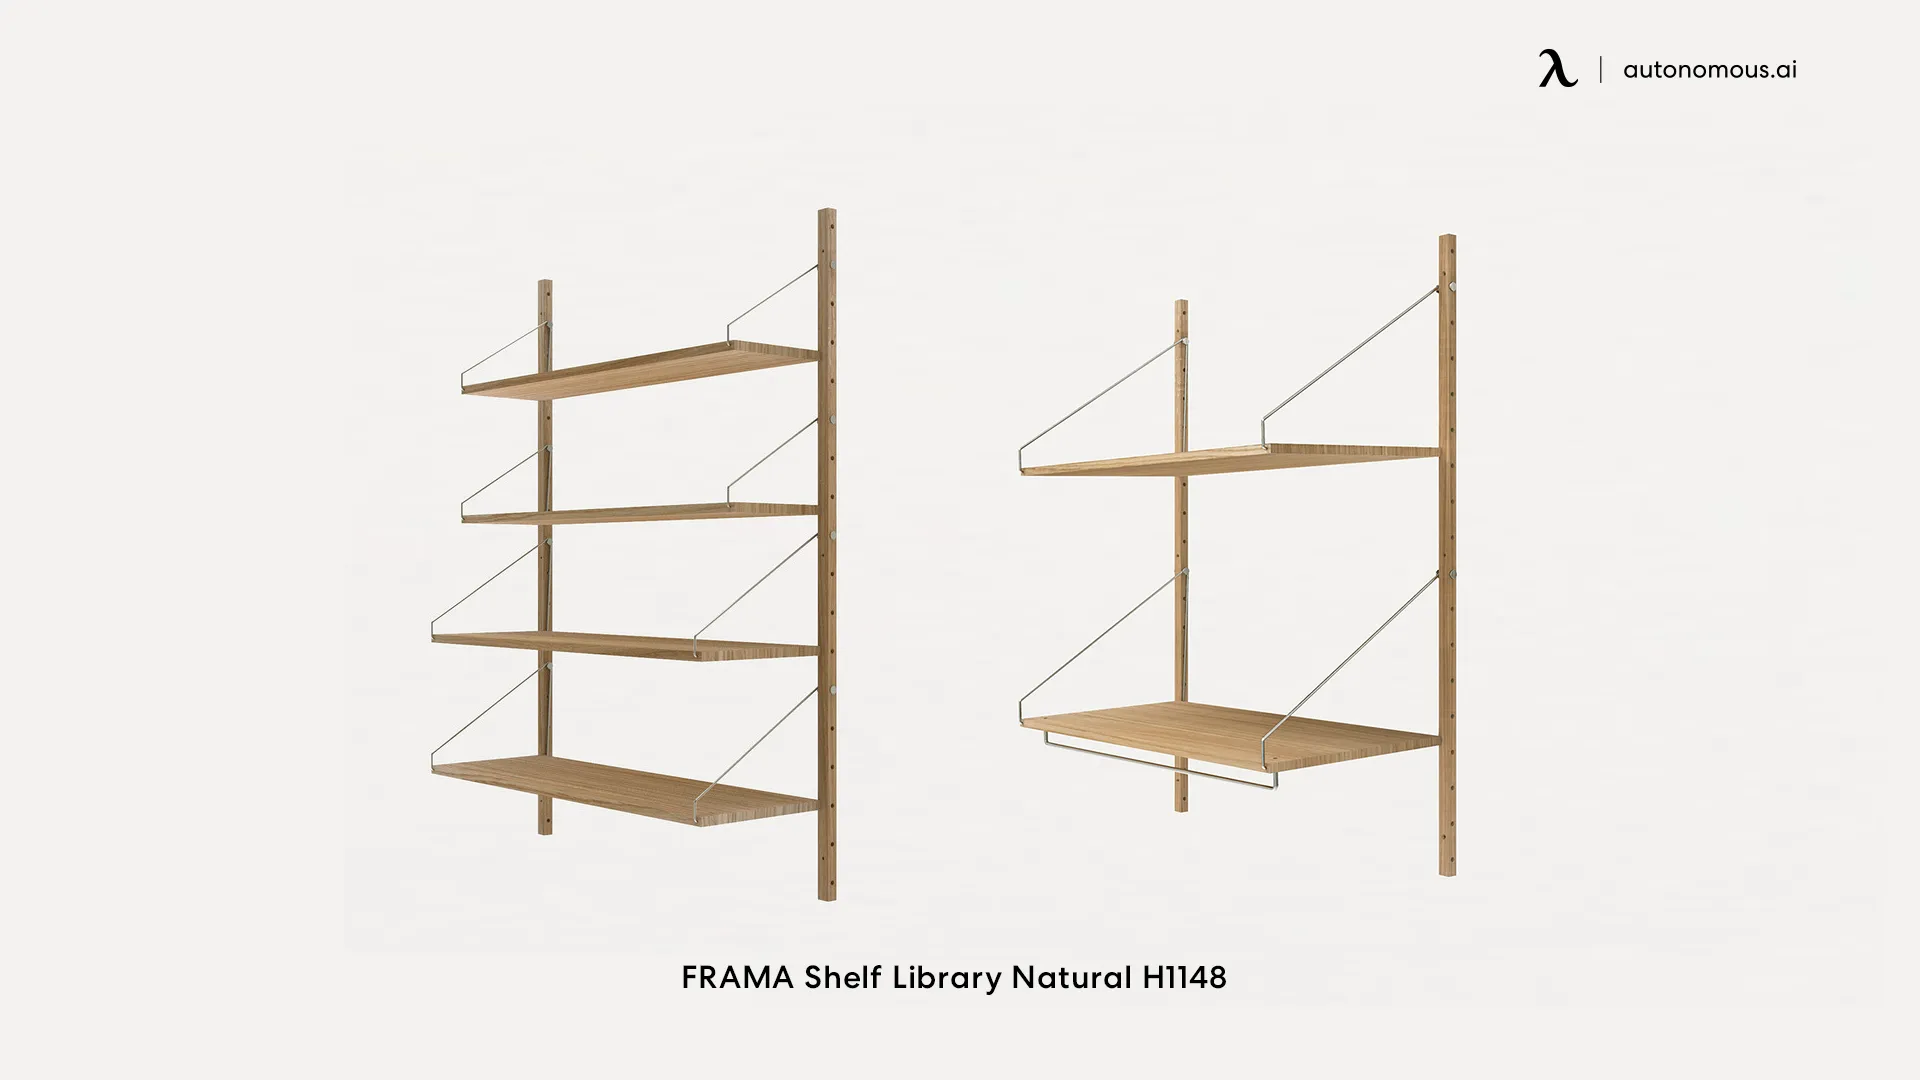 FRAMA Shelf Library Natural H1148